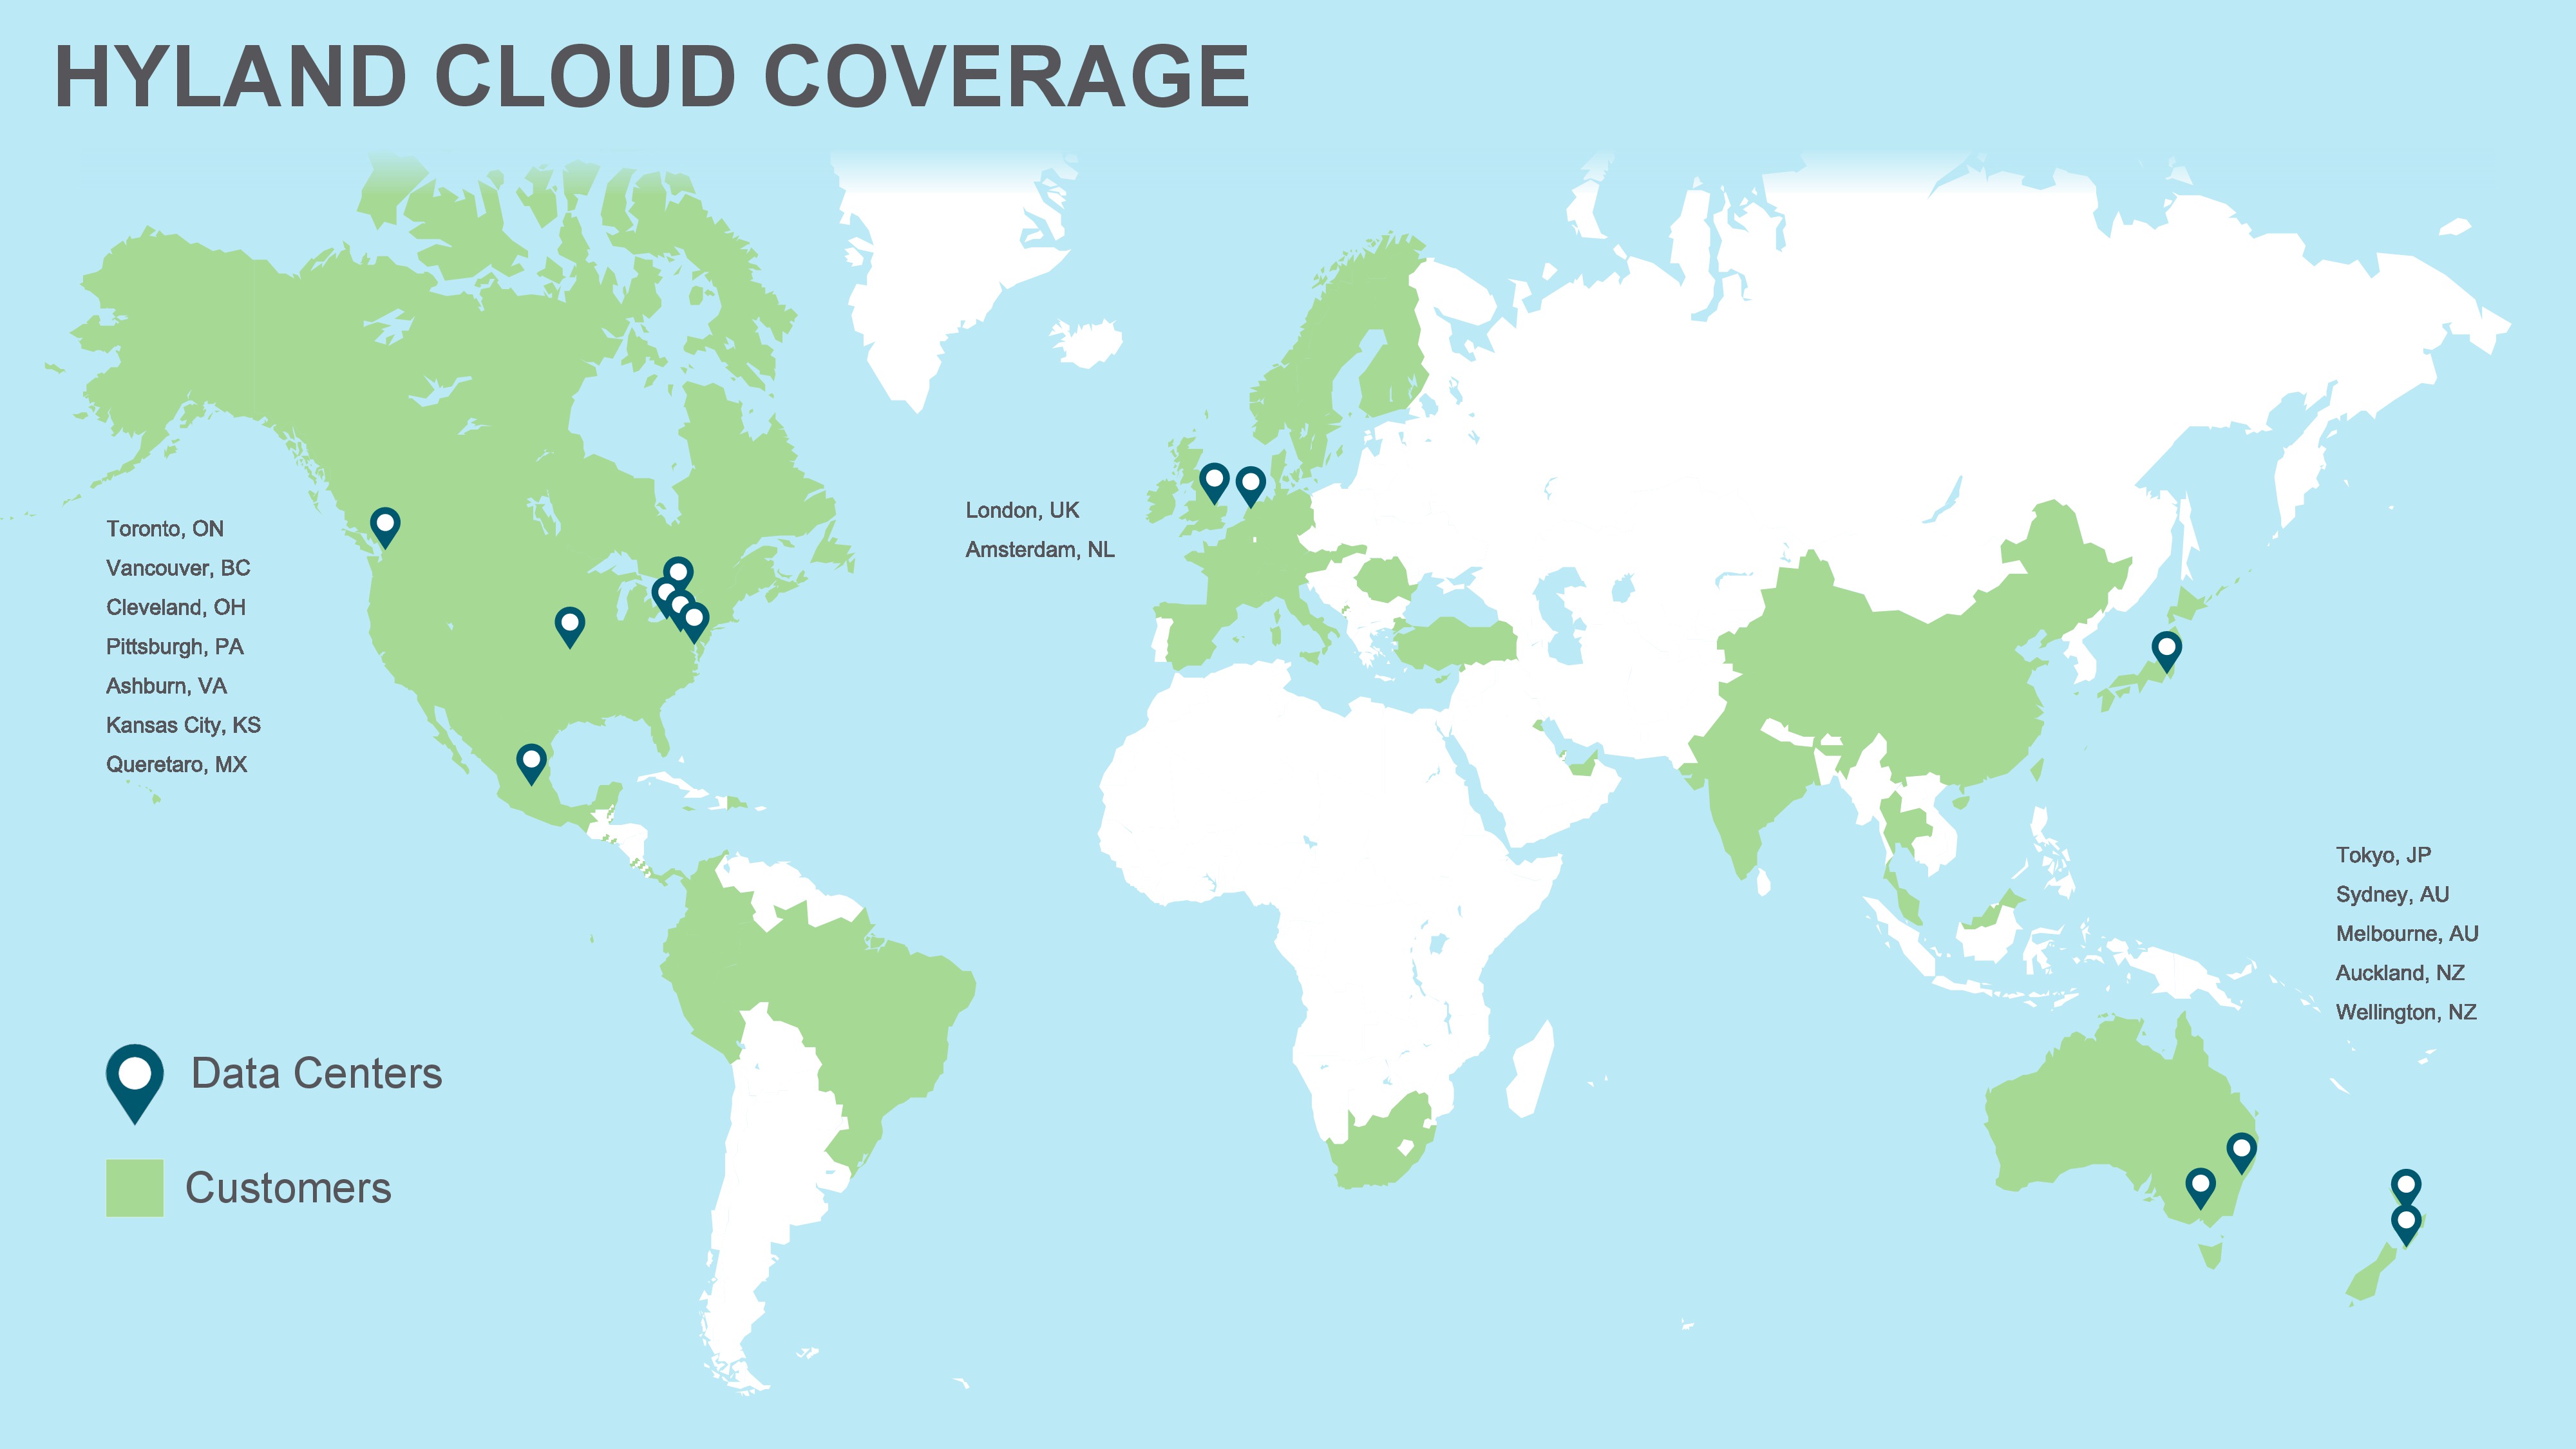 Hyland Cloud Coverage: Data centers are found in the following cities: Toronto, ON. Vancouver, BC. Cleveland, OH. Pittsburg, PA. Ashburn, VA. Kansas City, KS. Queretaro, MX. London, UK. Amsterdam, NL. Tokyo, JP. Sydney, AU. Melbourne, AU. Auckland, NZ. Wellington, NZ.